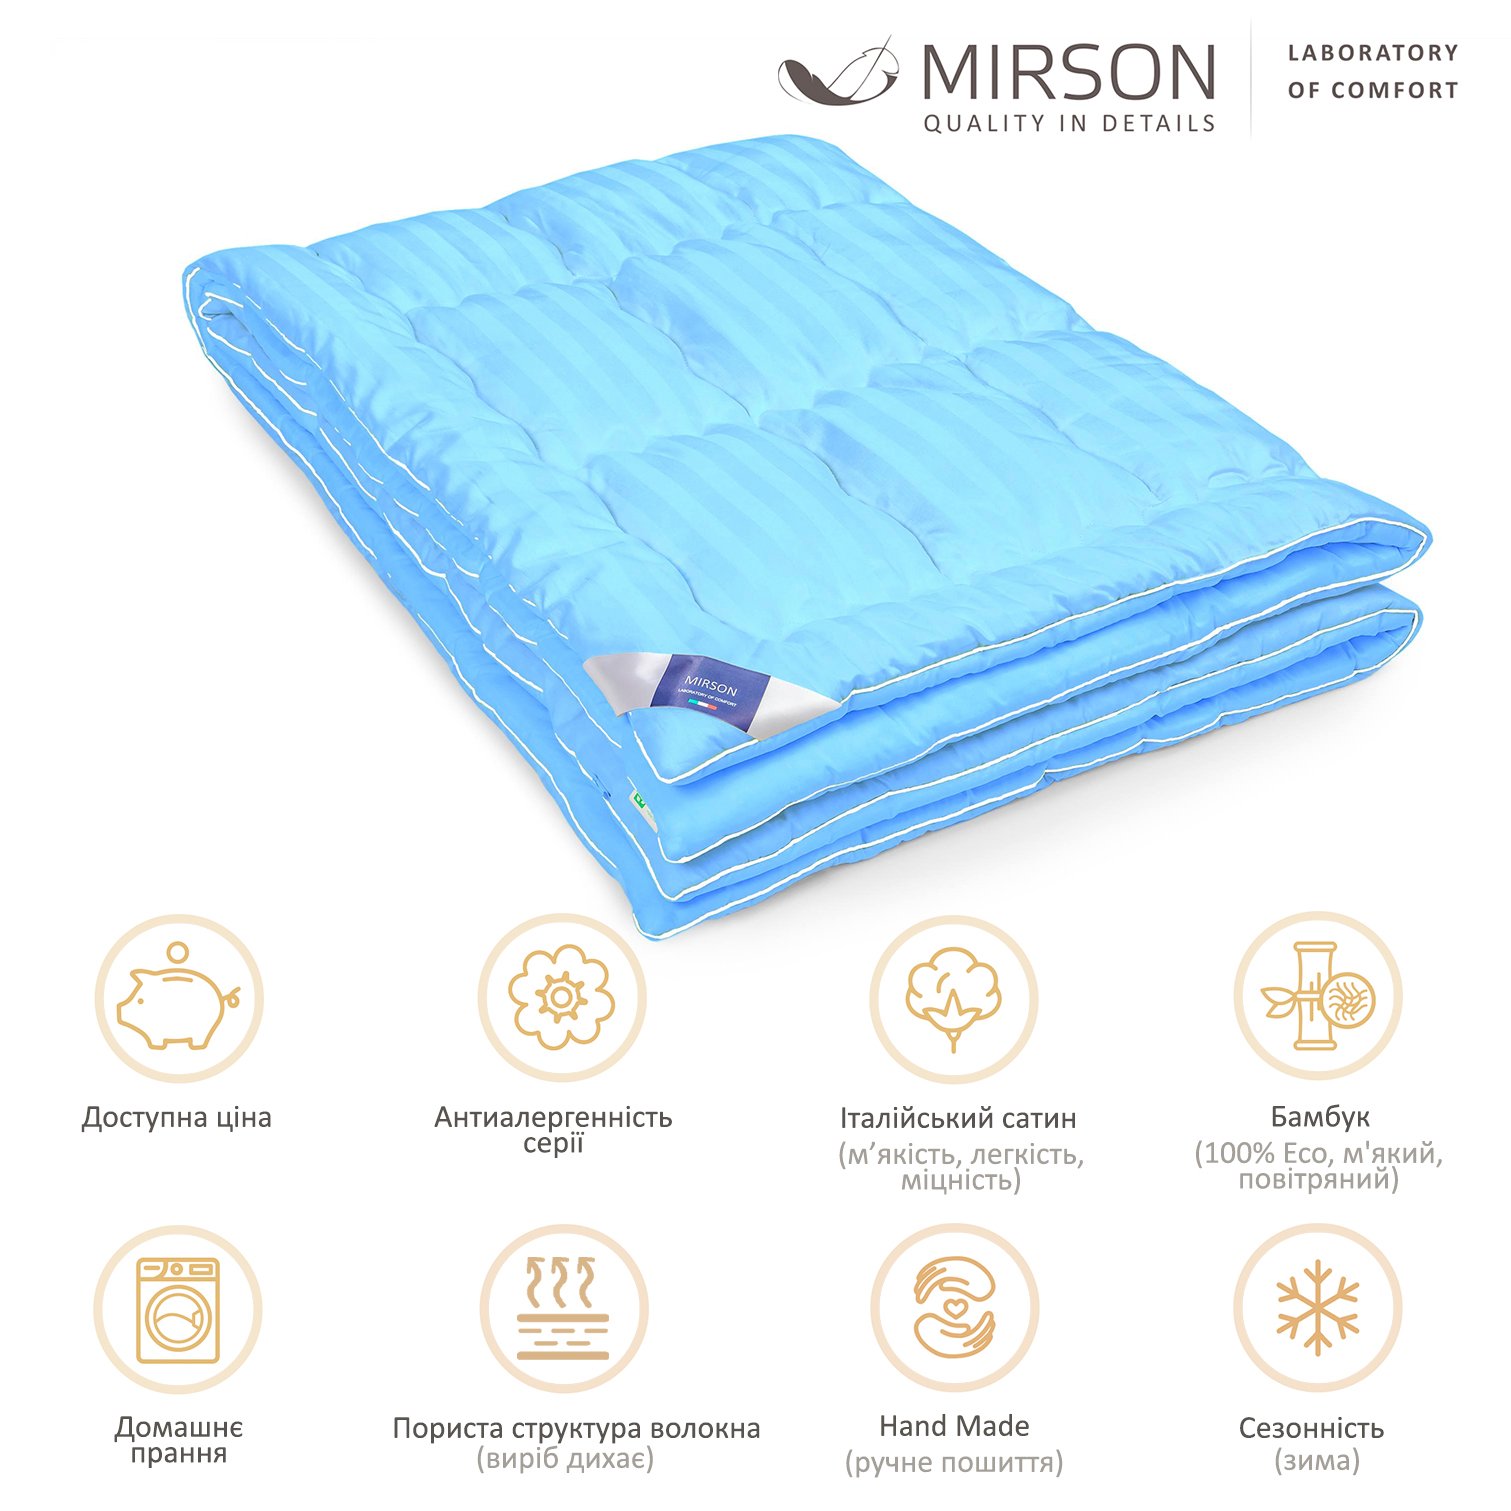 Одеяло бамбуковое MirSon Valentino Hand Made №0434, зимнее, 140x205 см, голубое - фото 6